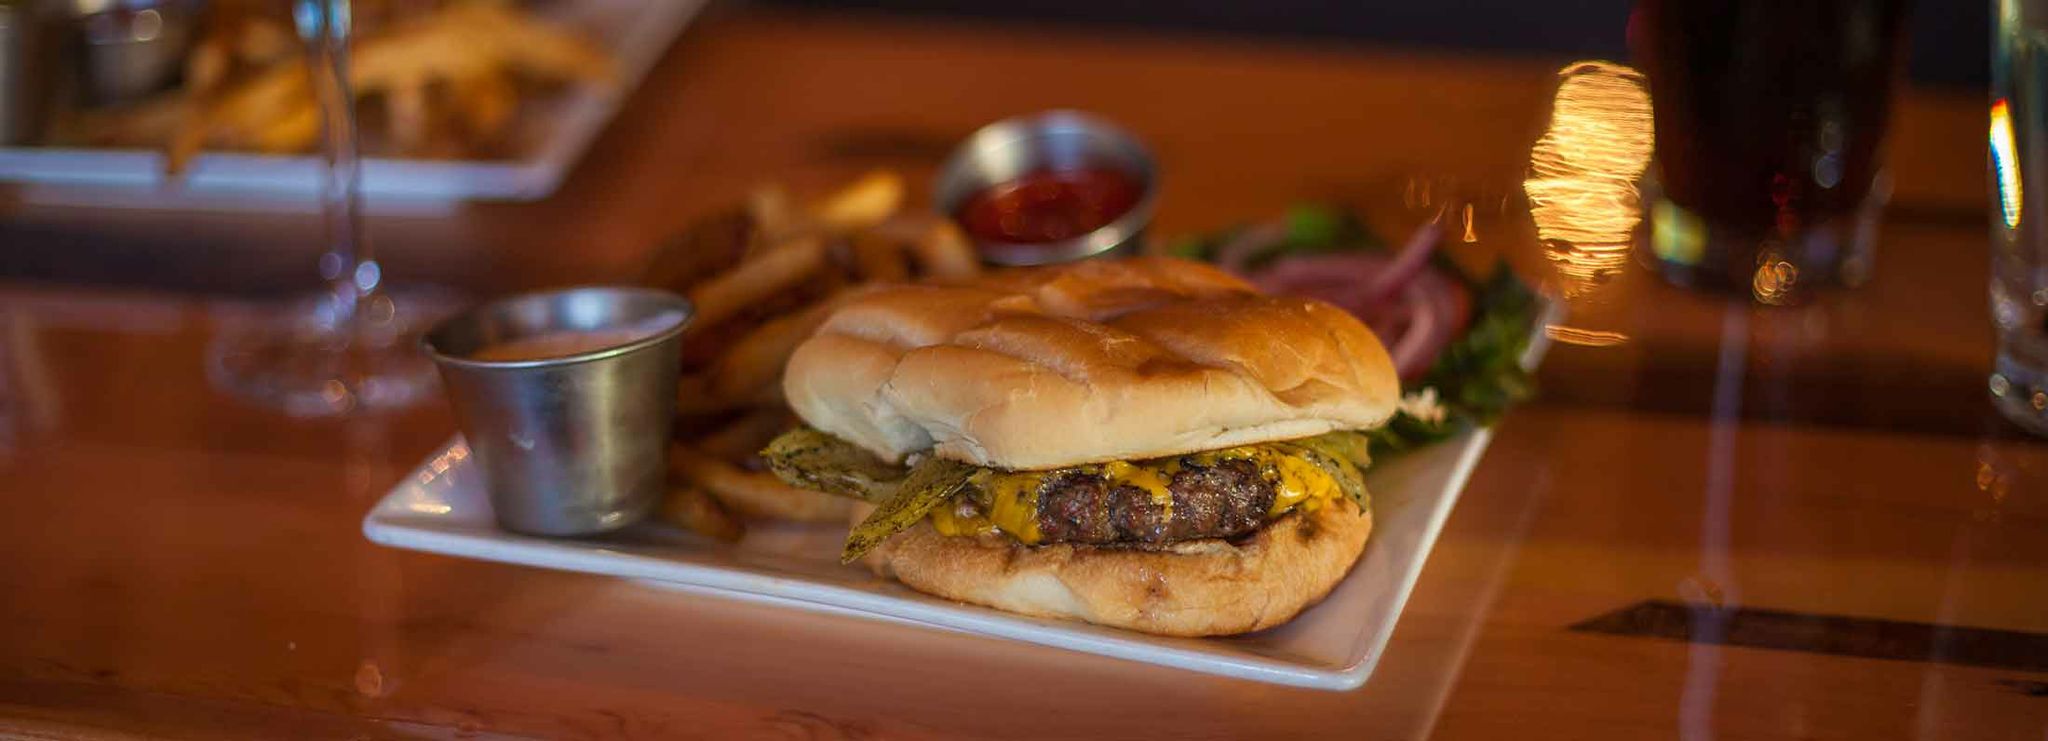 Bison Burgers in Missoula, Montana